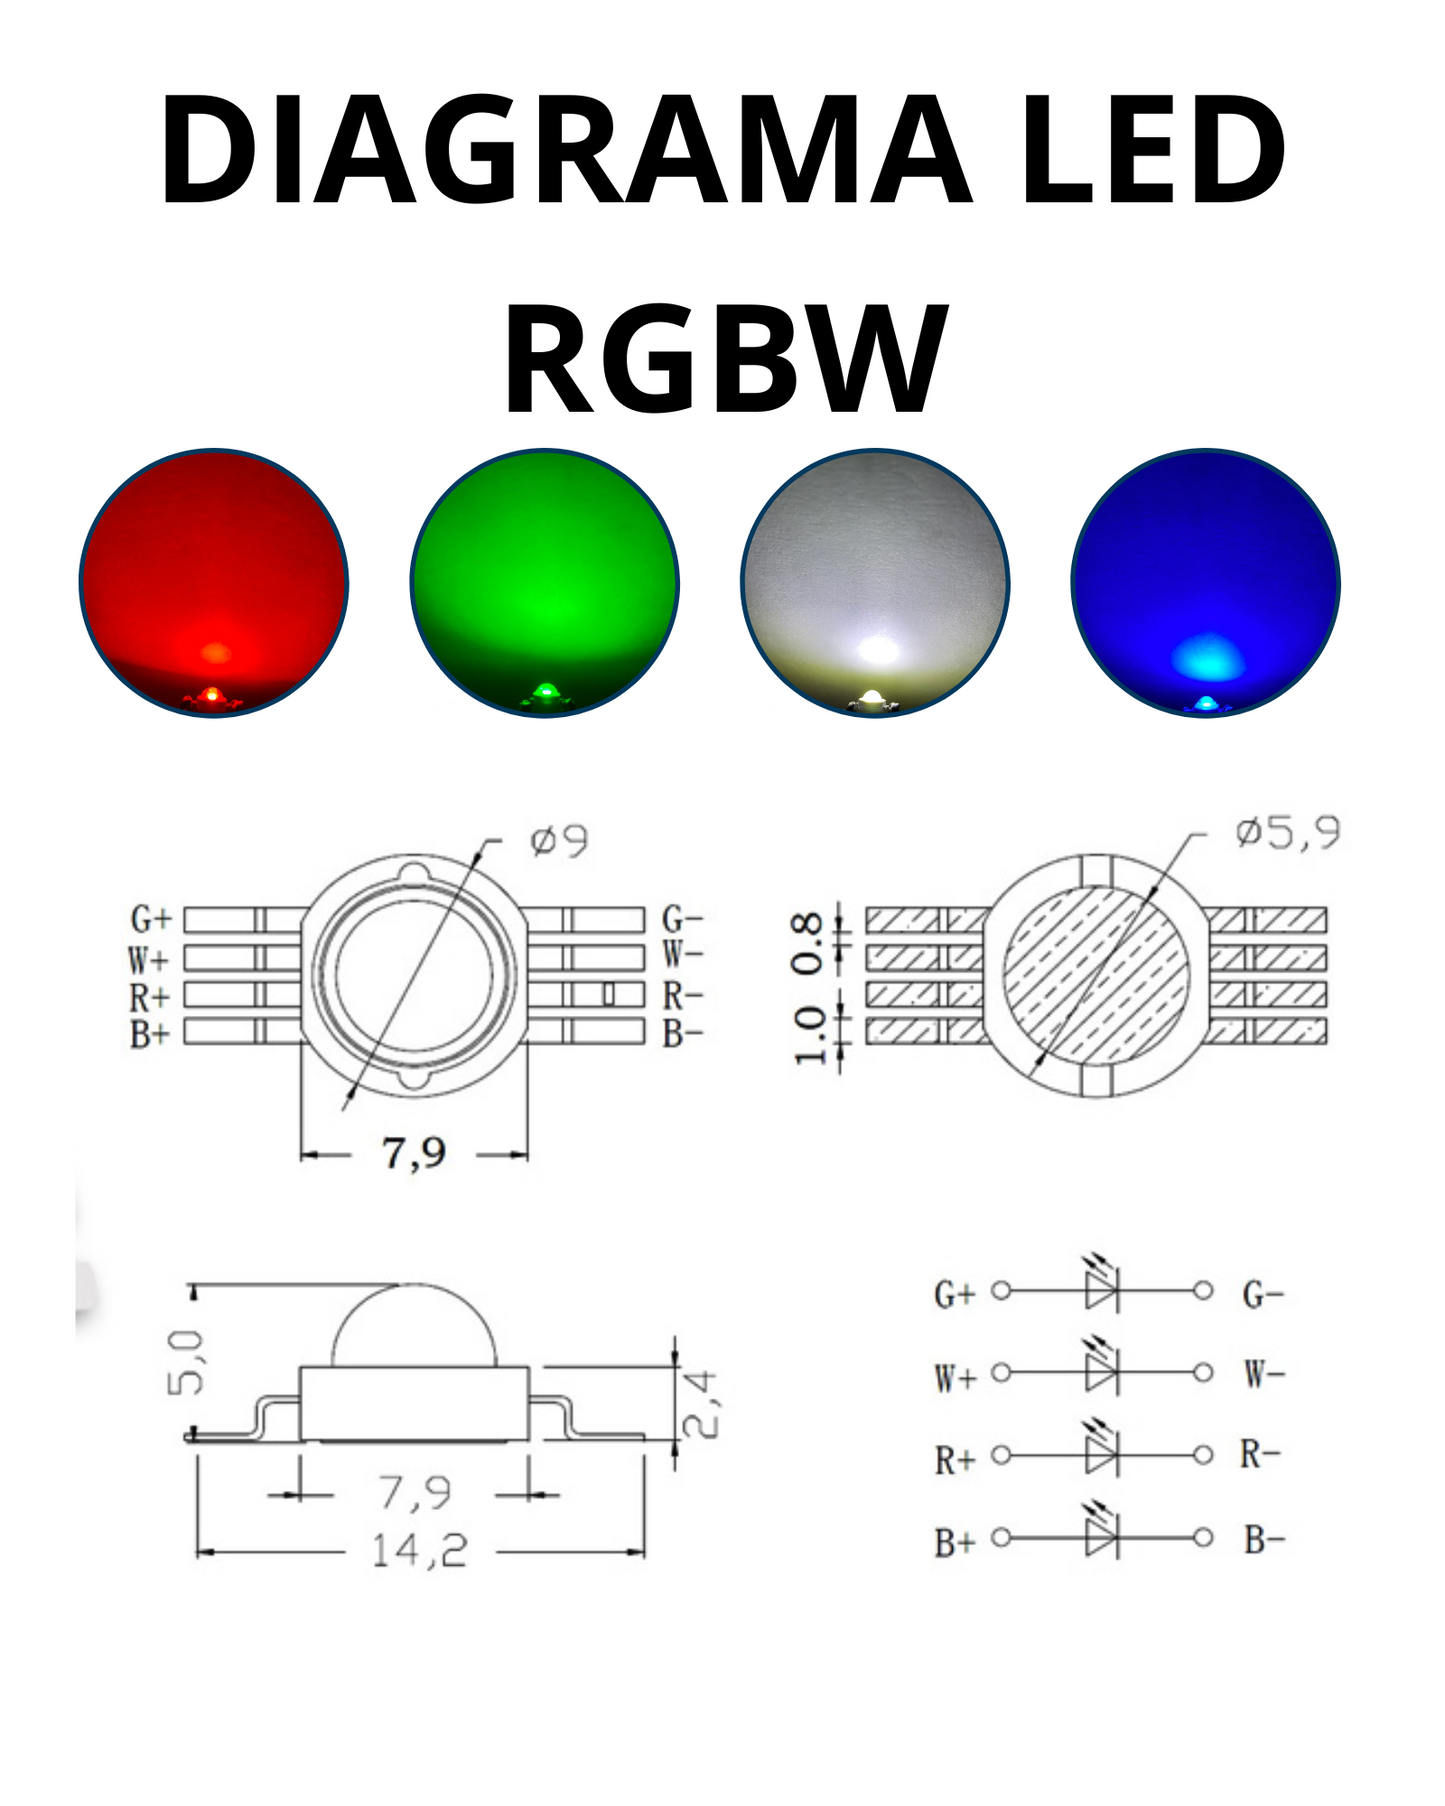 Chip LED de potencia 12W RGBW 8 pines | Pastilla LED RGB+Blanco